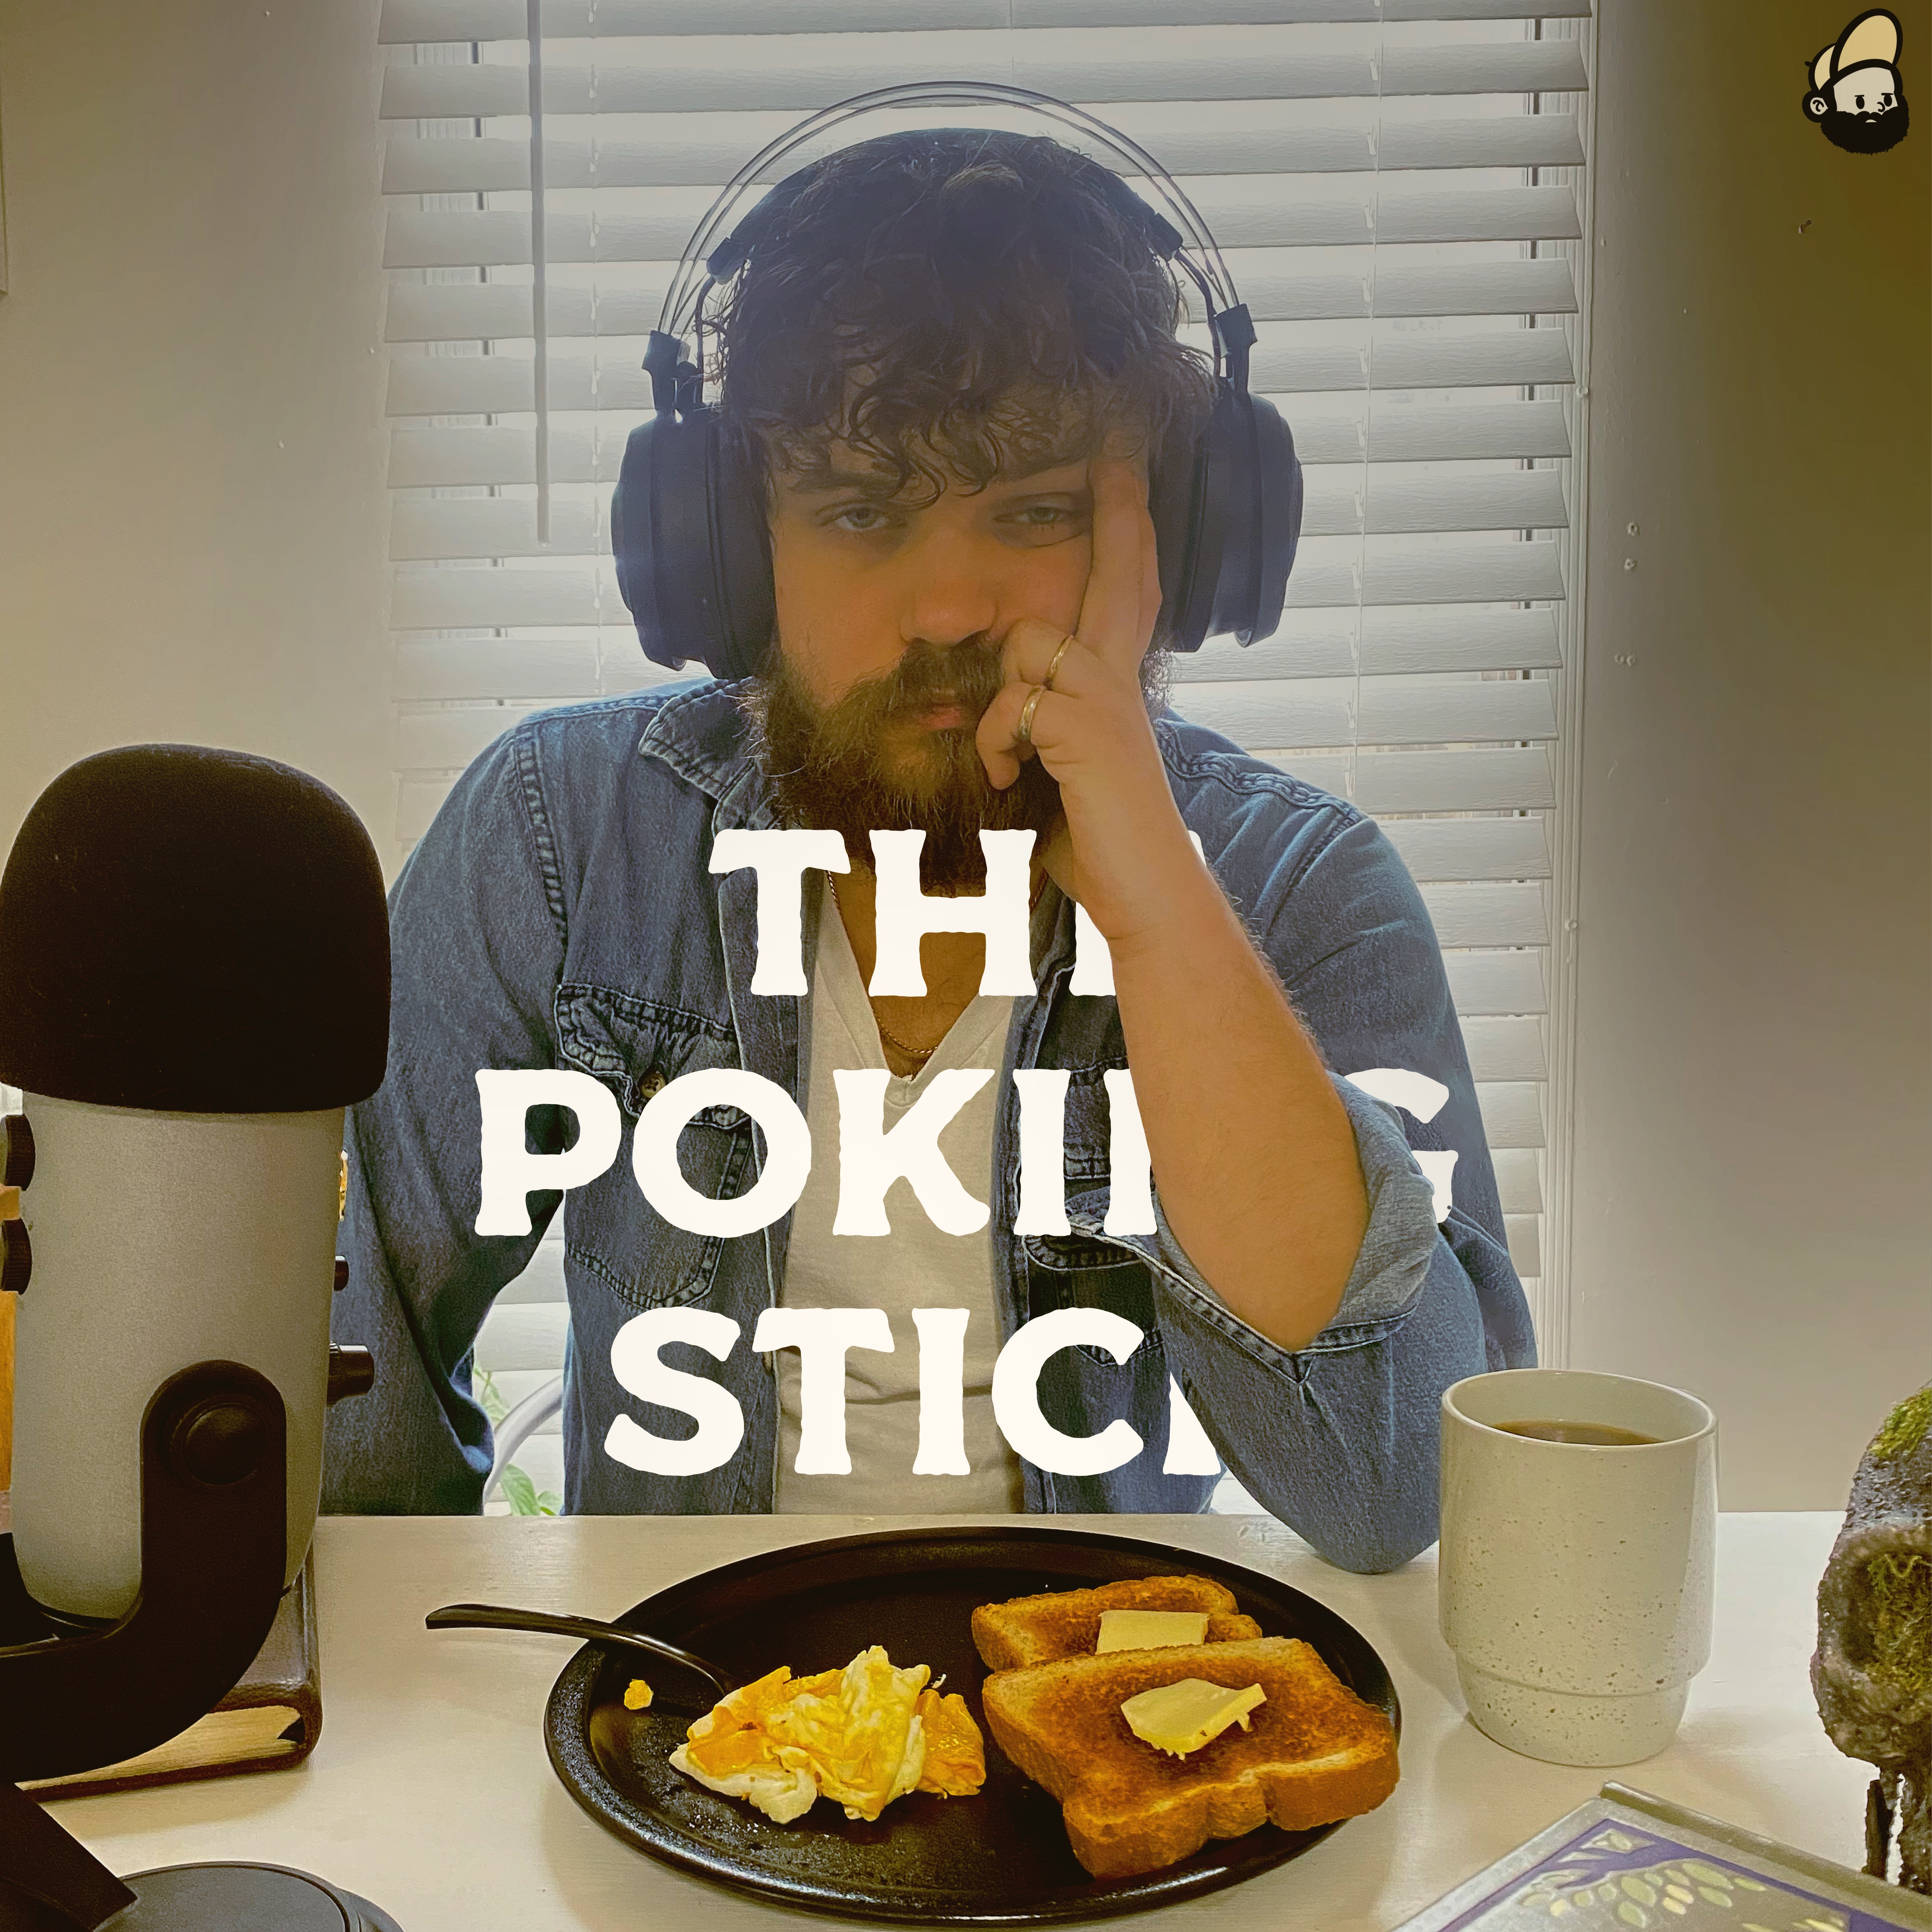 POKI  Podcast on Spotify